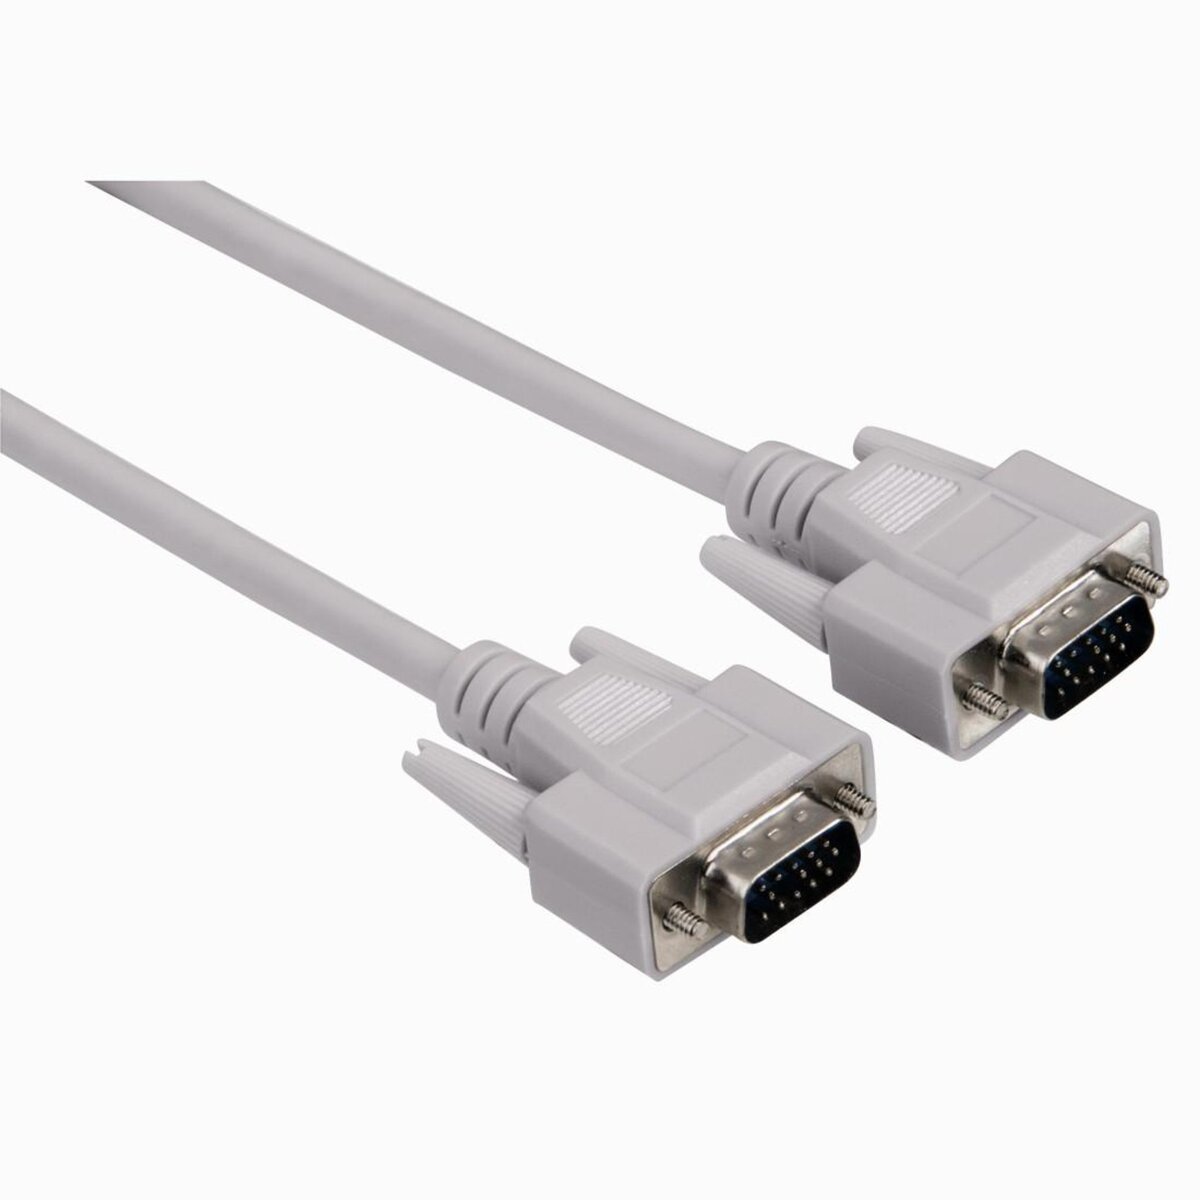 QILIVE Connectique Cable MON VGA HDD 1.8 Metres pas cher 